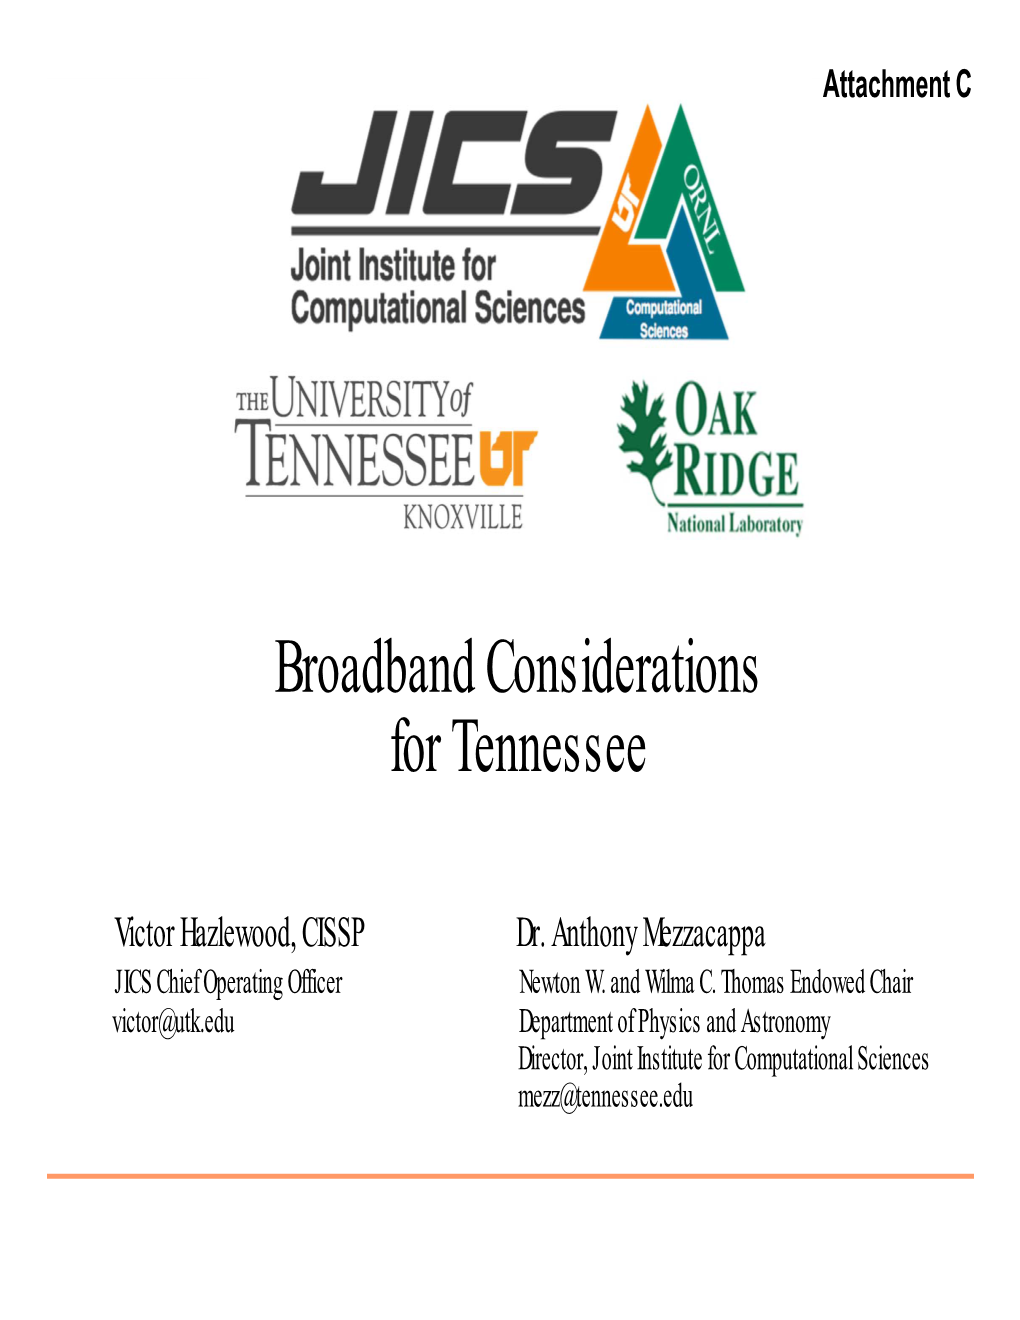 Broadband Considerations for Tennessee